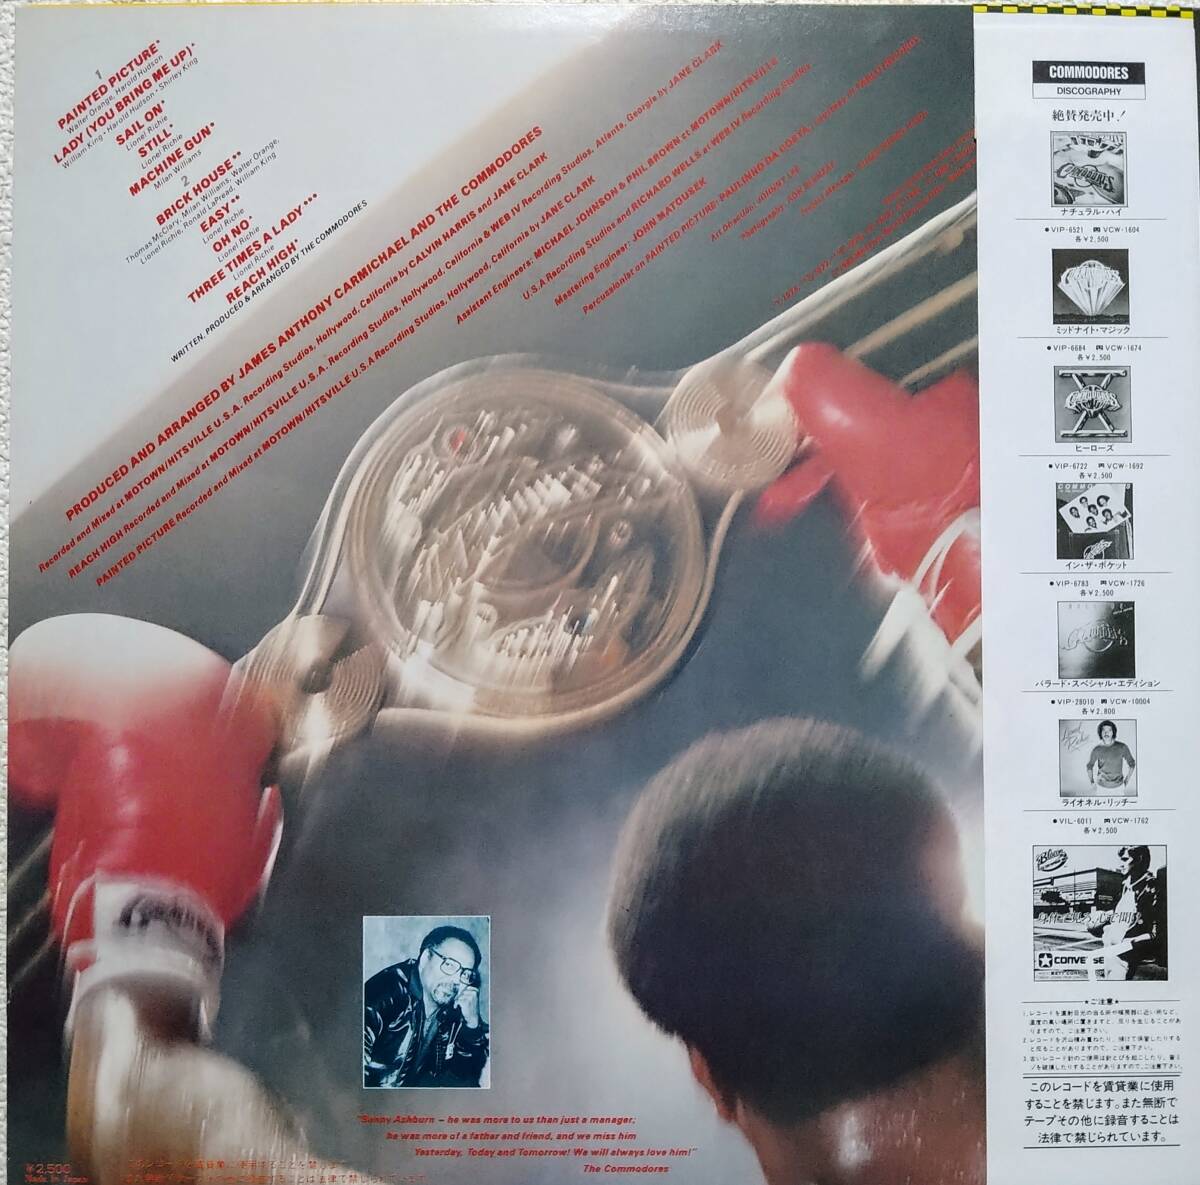 【LP Soul】Commodores（コモドアーズ）「All The Great Hits」JPN盤 Machine Gun.Brick House 他 収録！_裏ジャケット